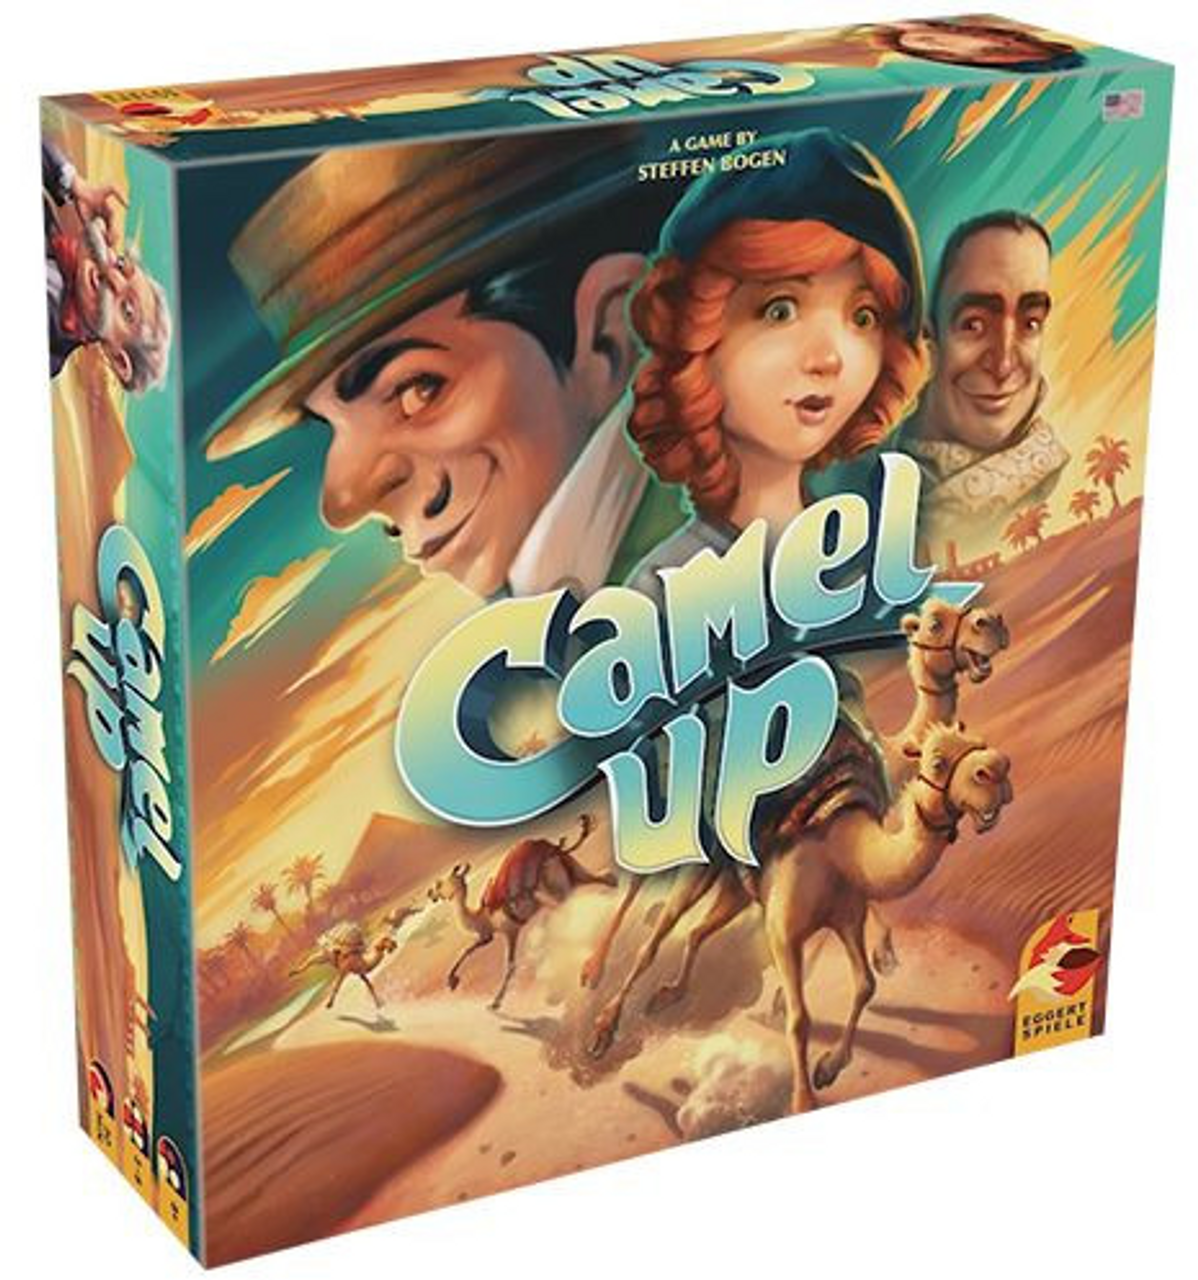 Camel Up Boardgame Mobile App - Paste Magazine